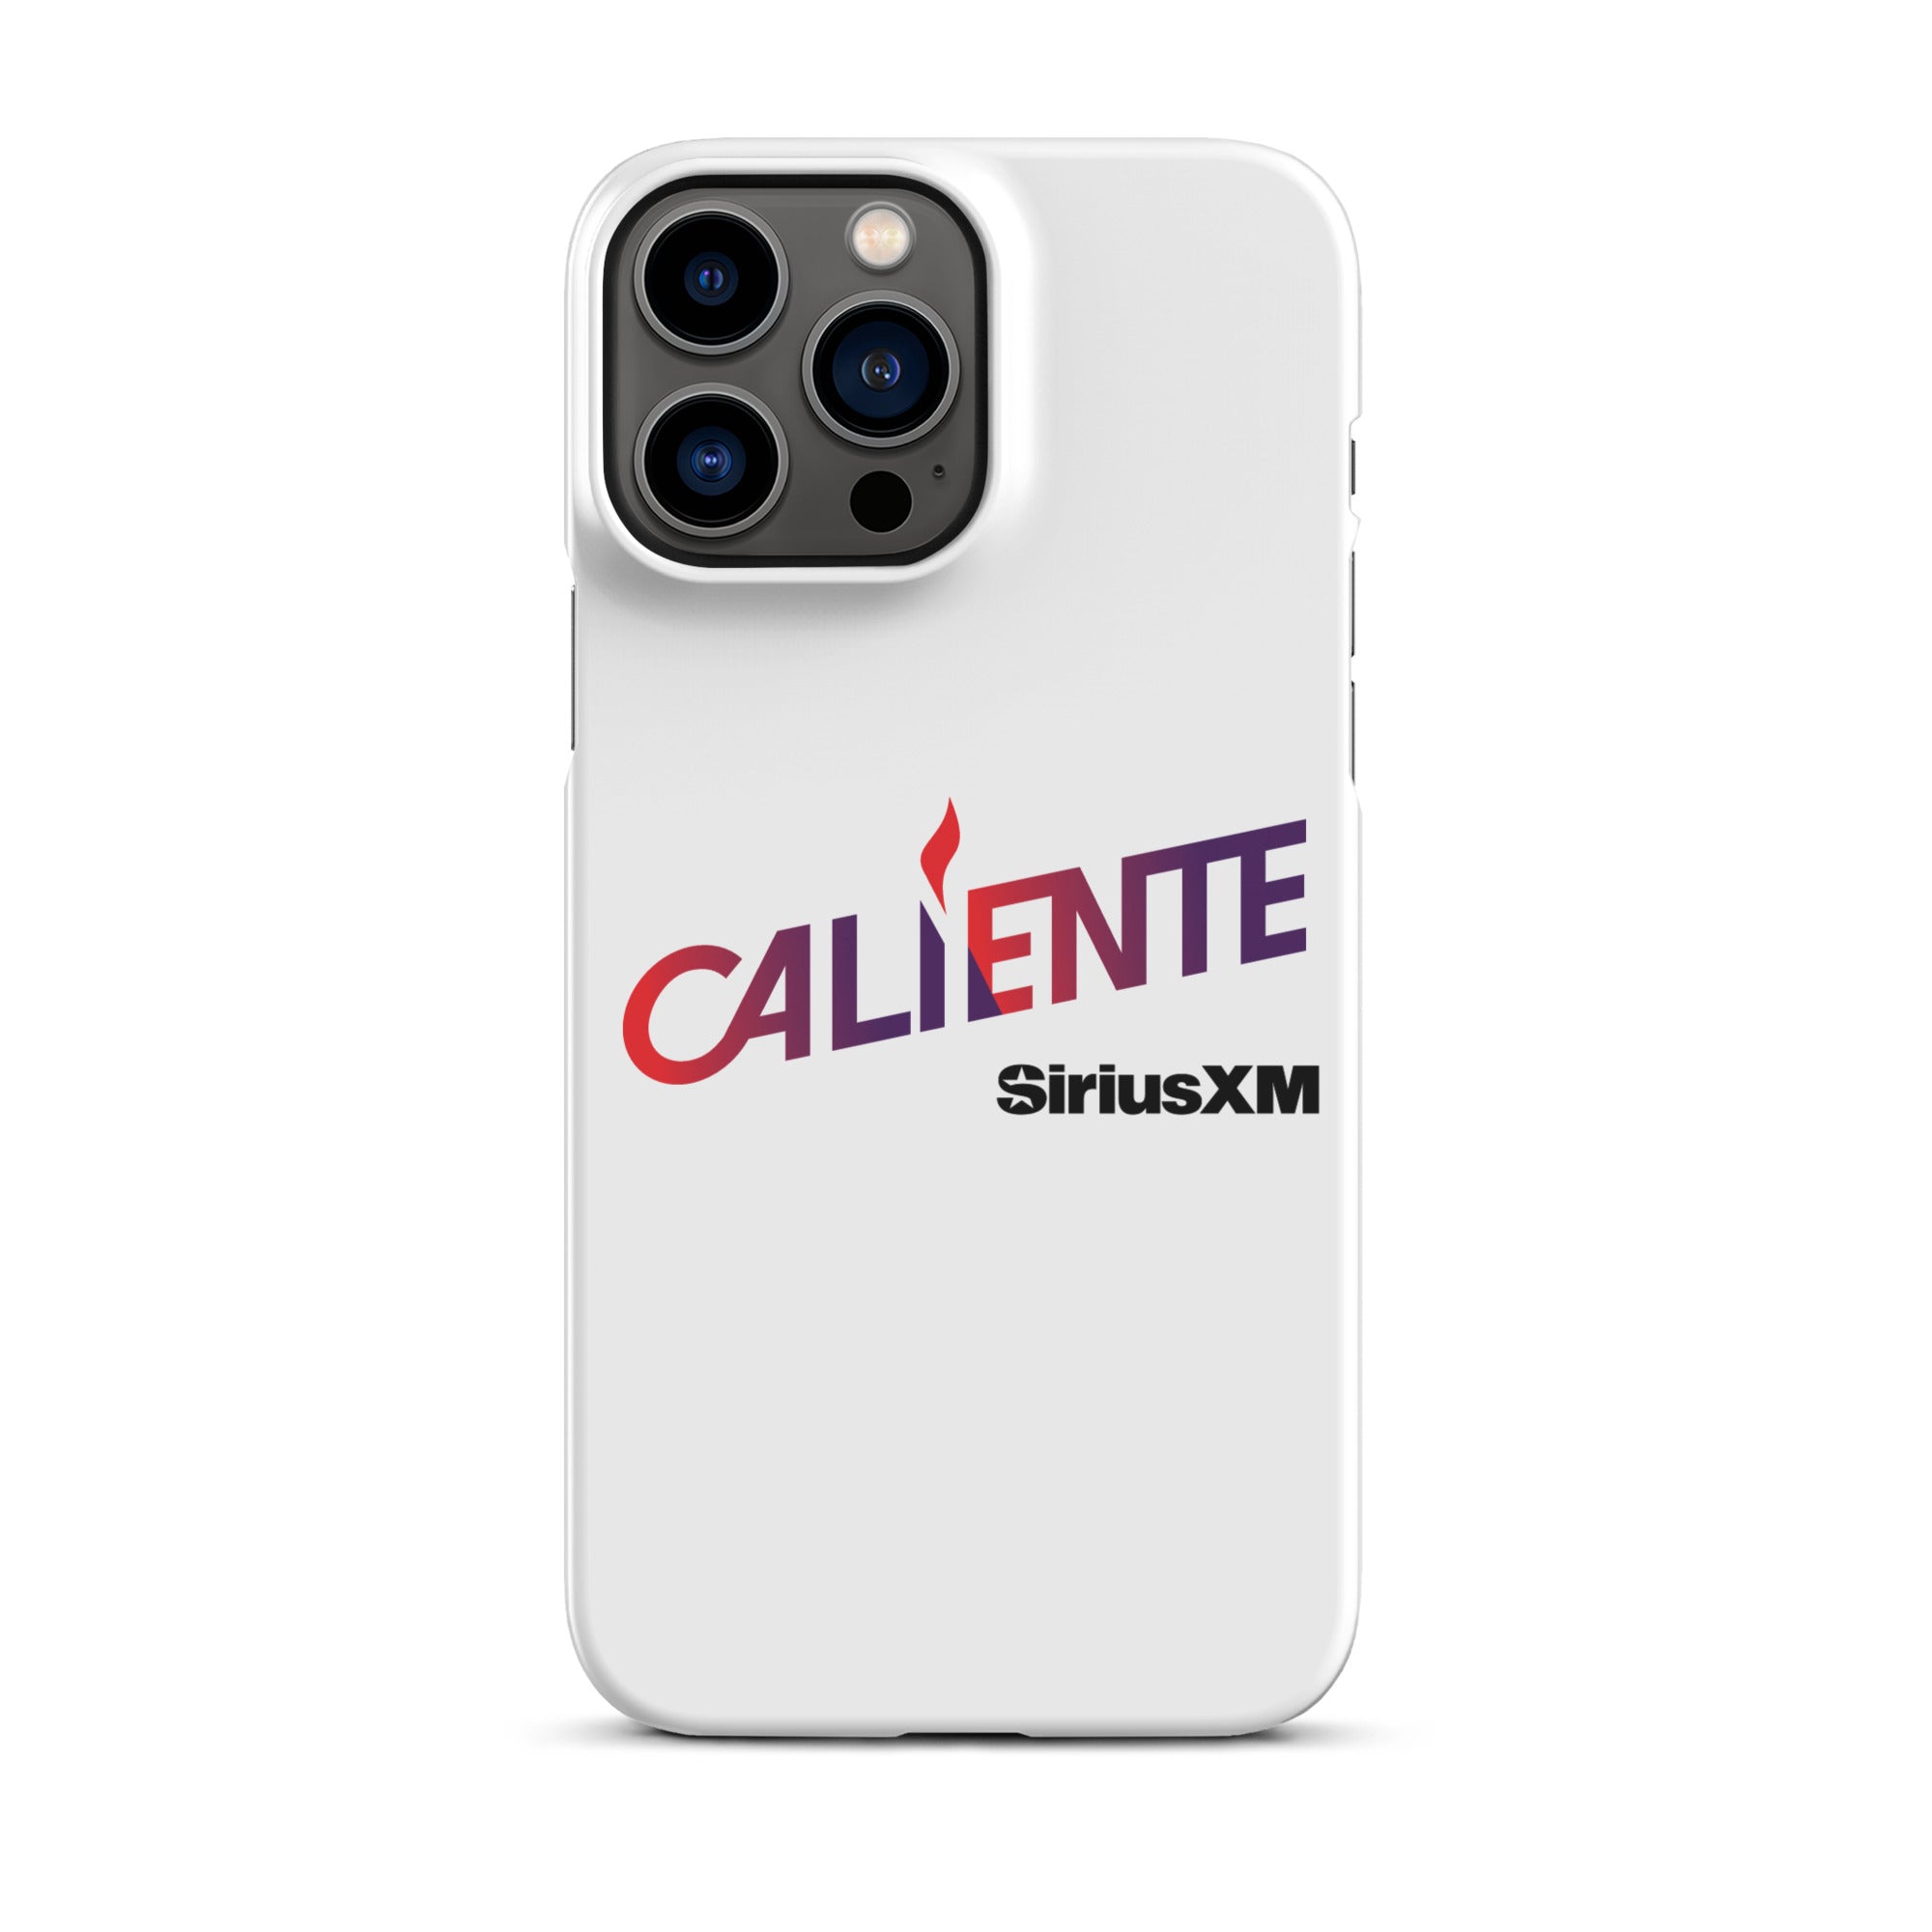 Caliente: iPhone® Snap Case